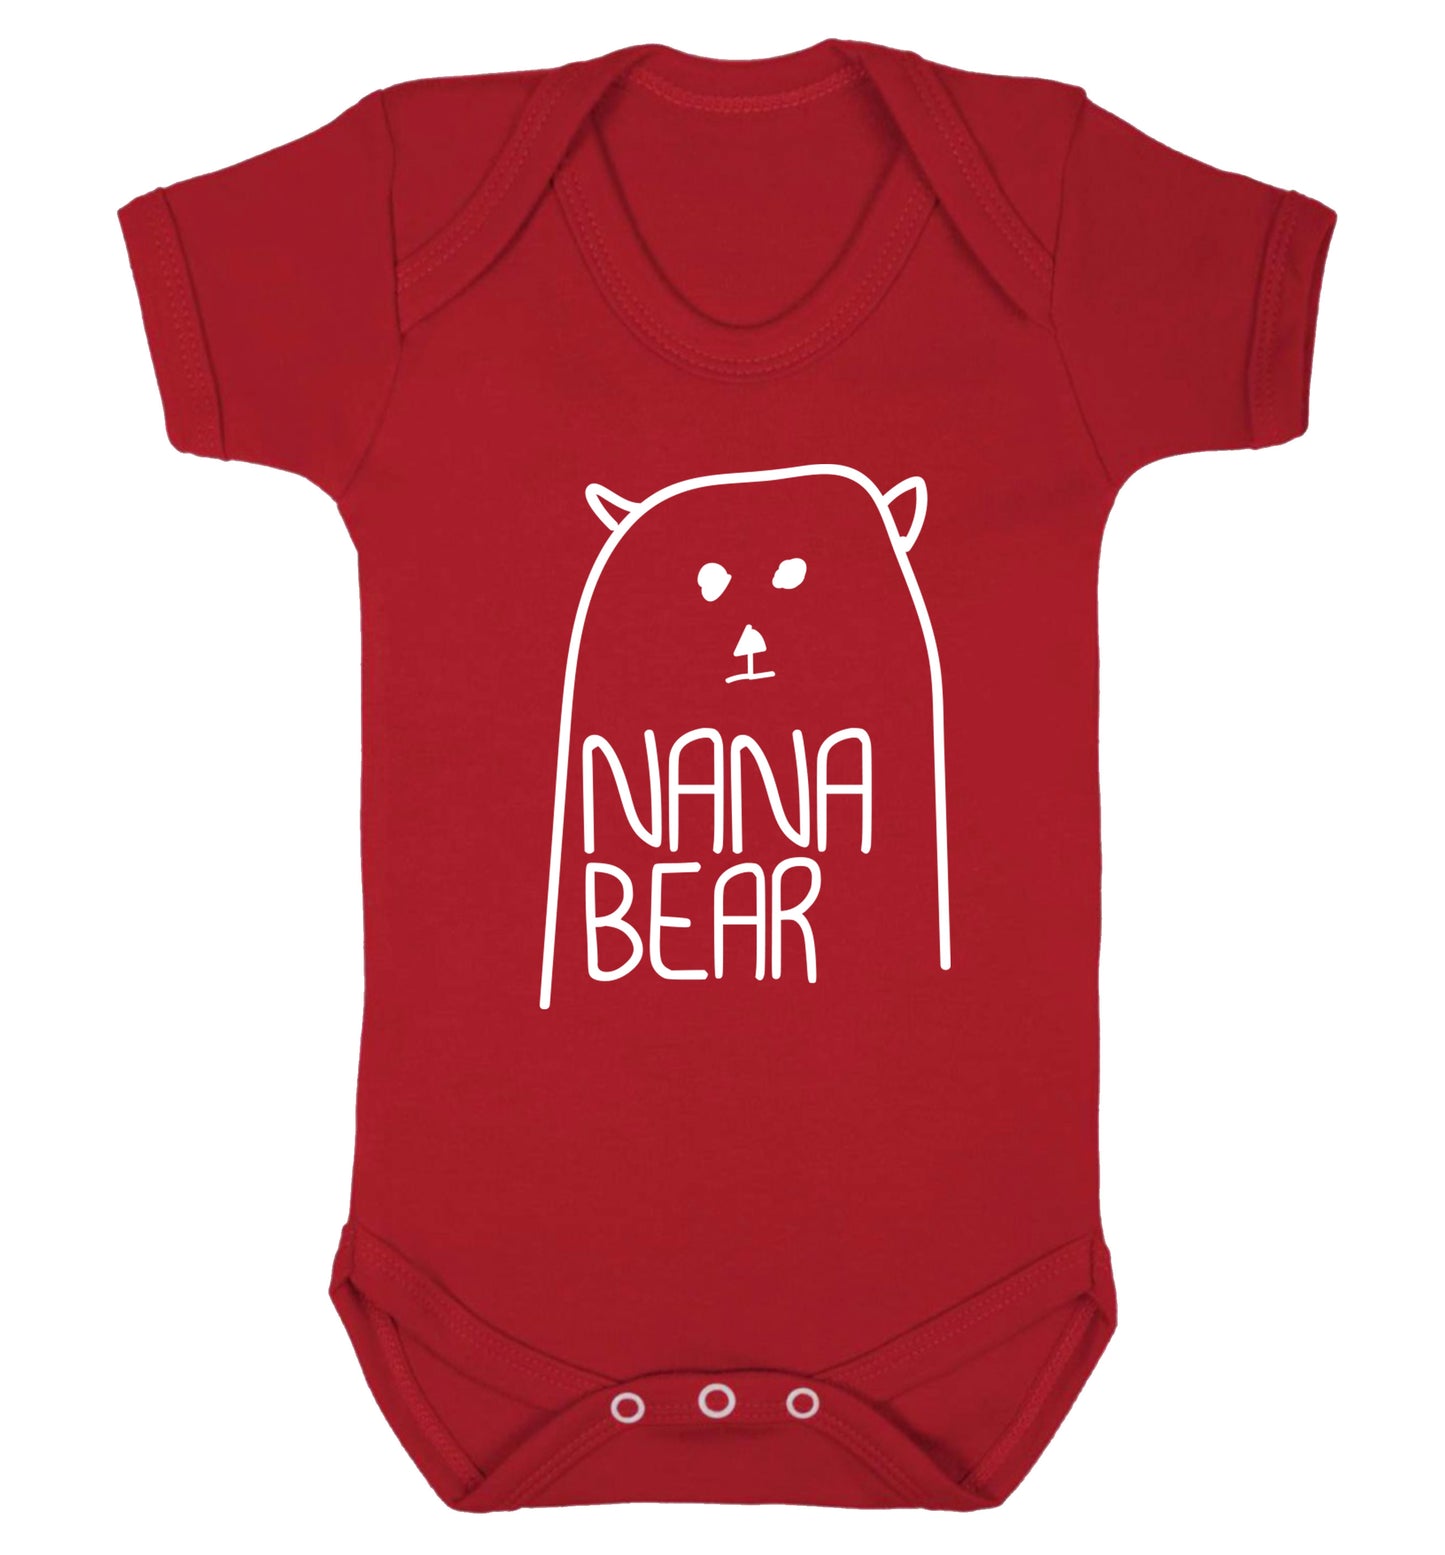 Nana bear Baby Vest red 18-24 months